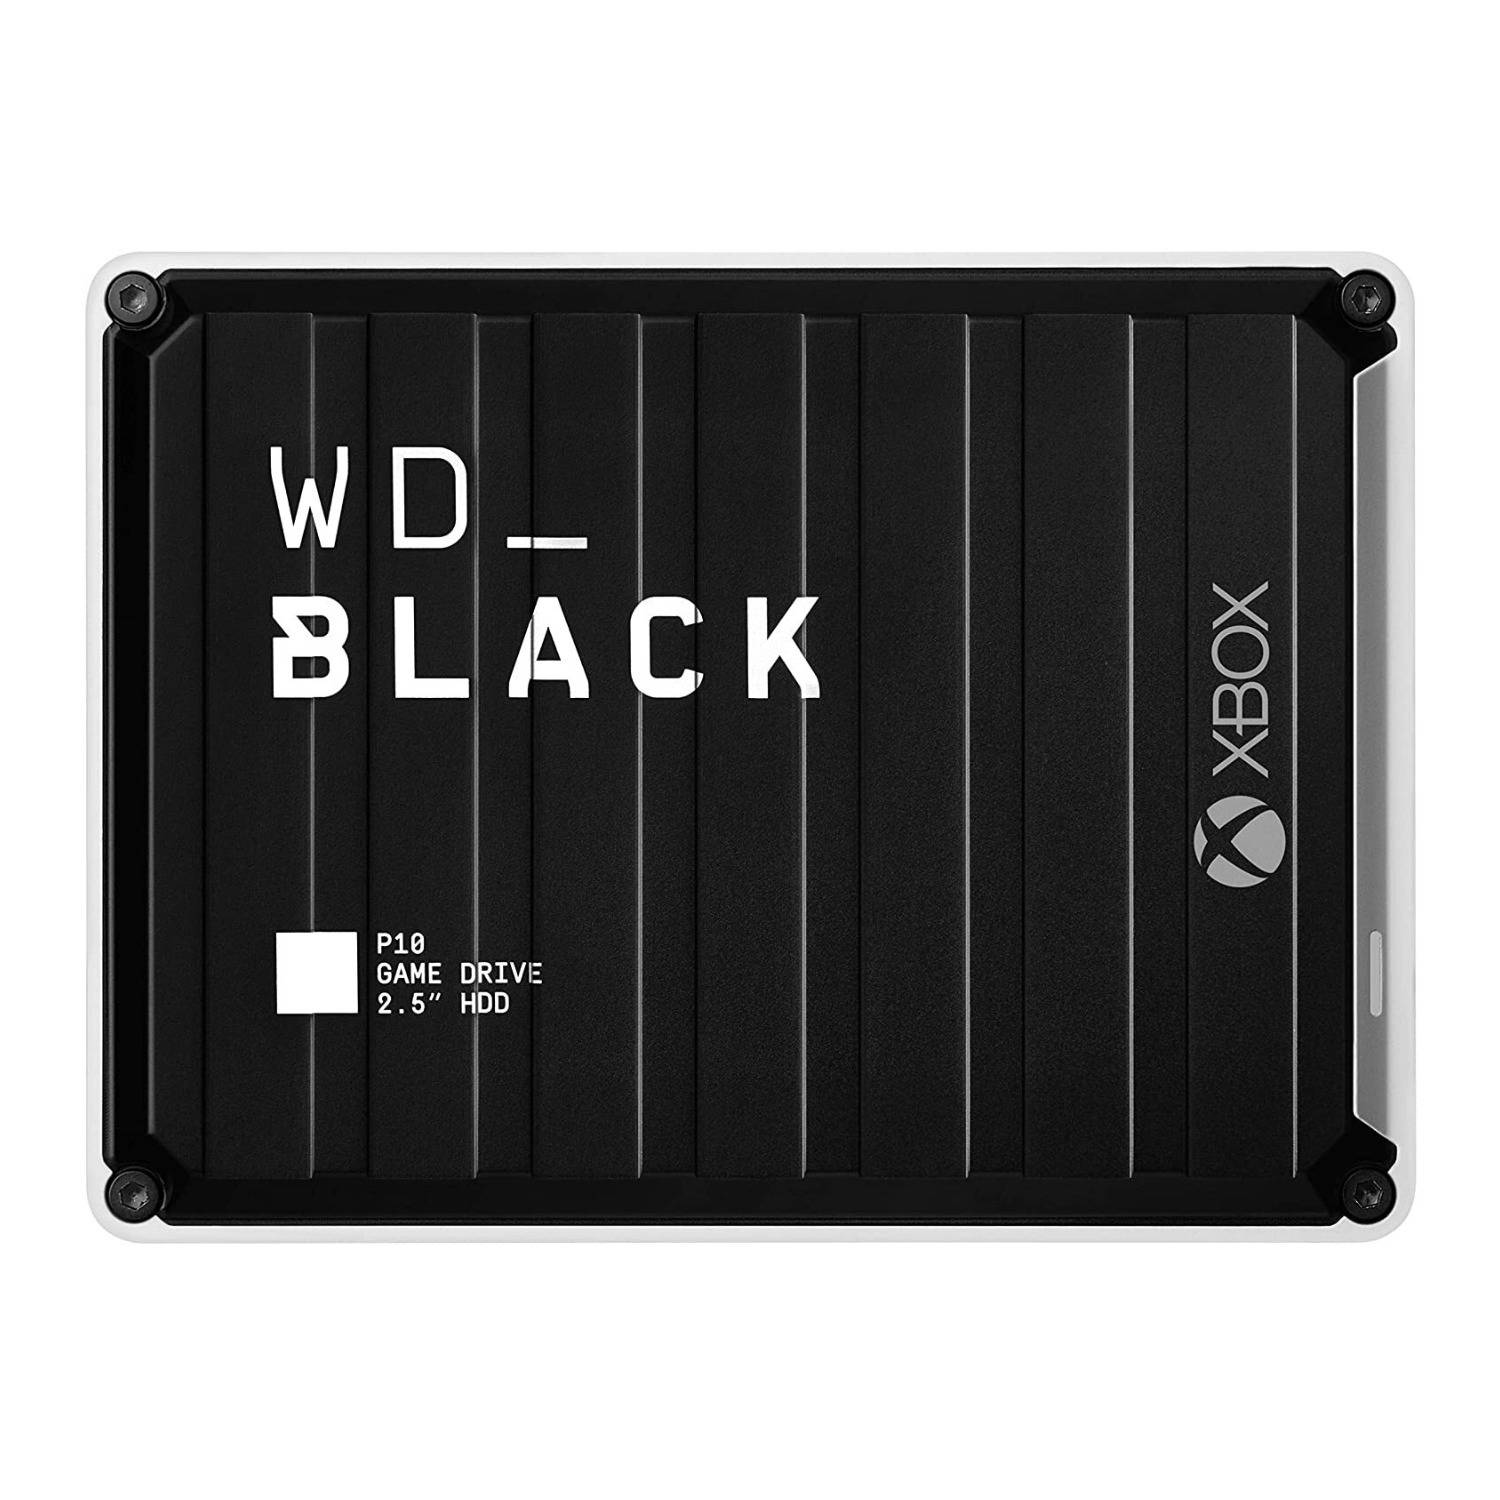 Western Digital Black 3TB P10 Game Drive for Xbox